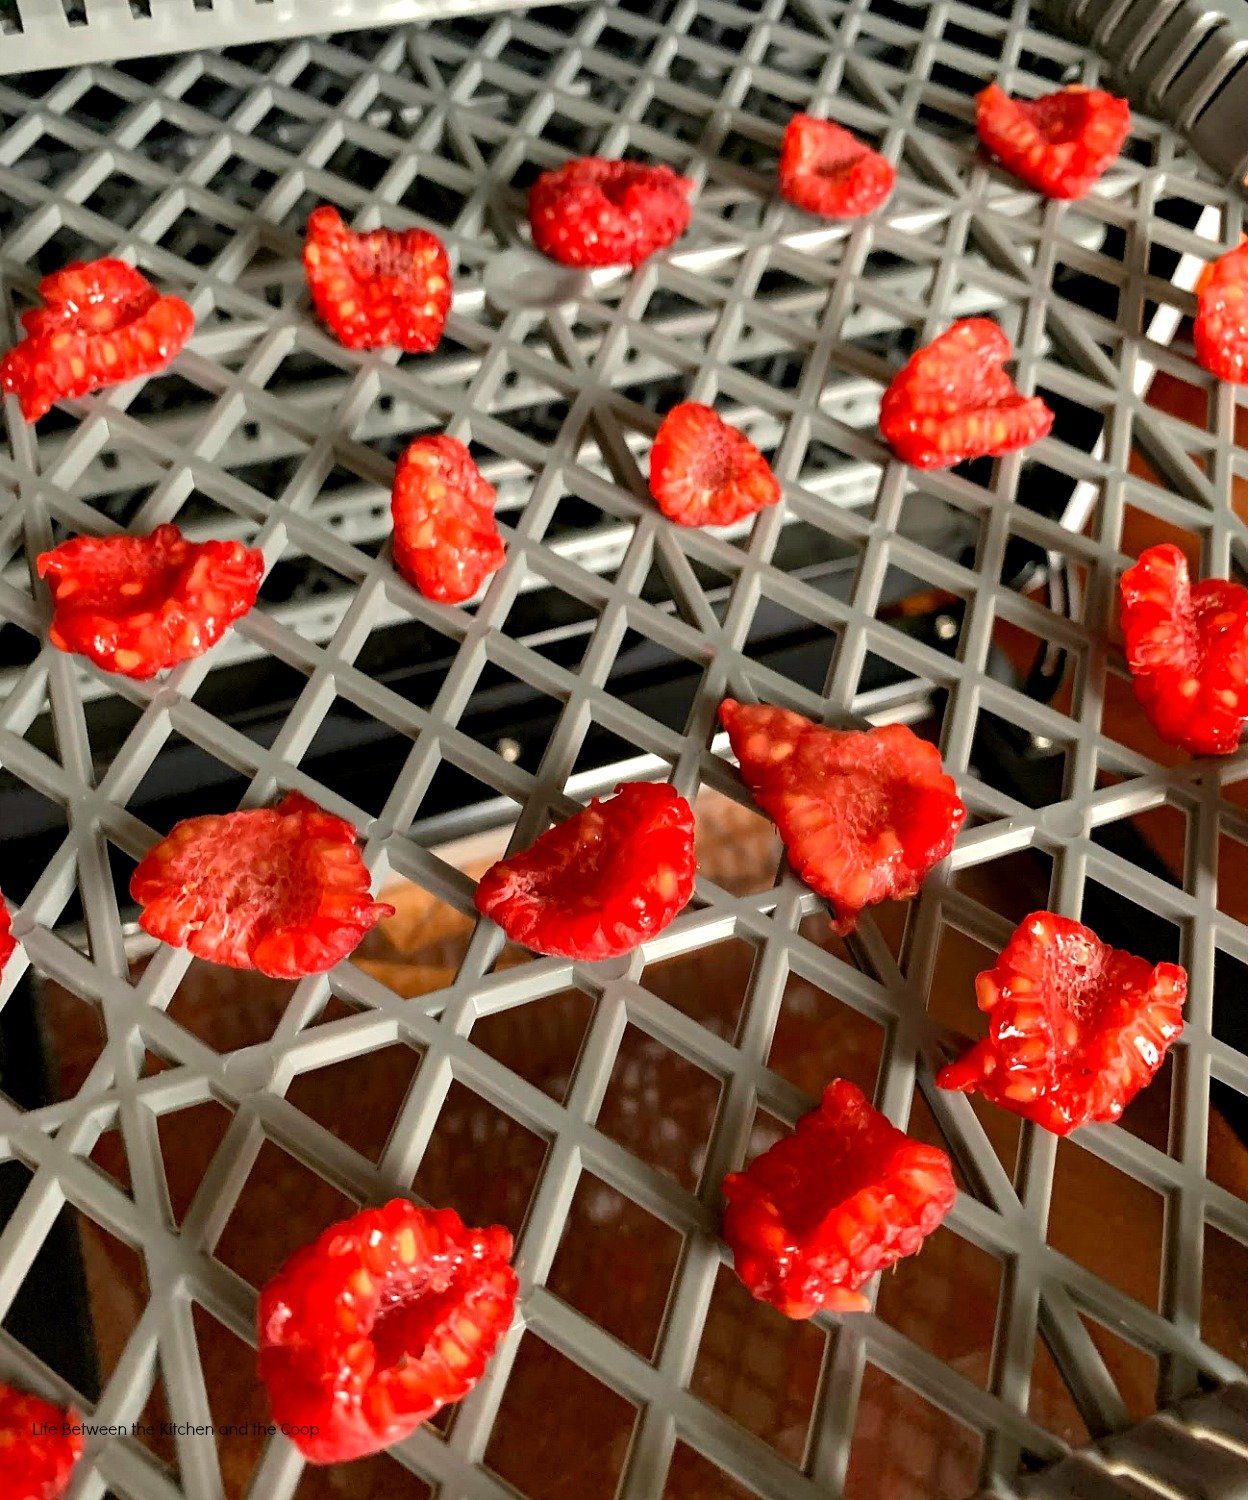 dehydrated raspberries